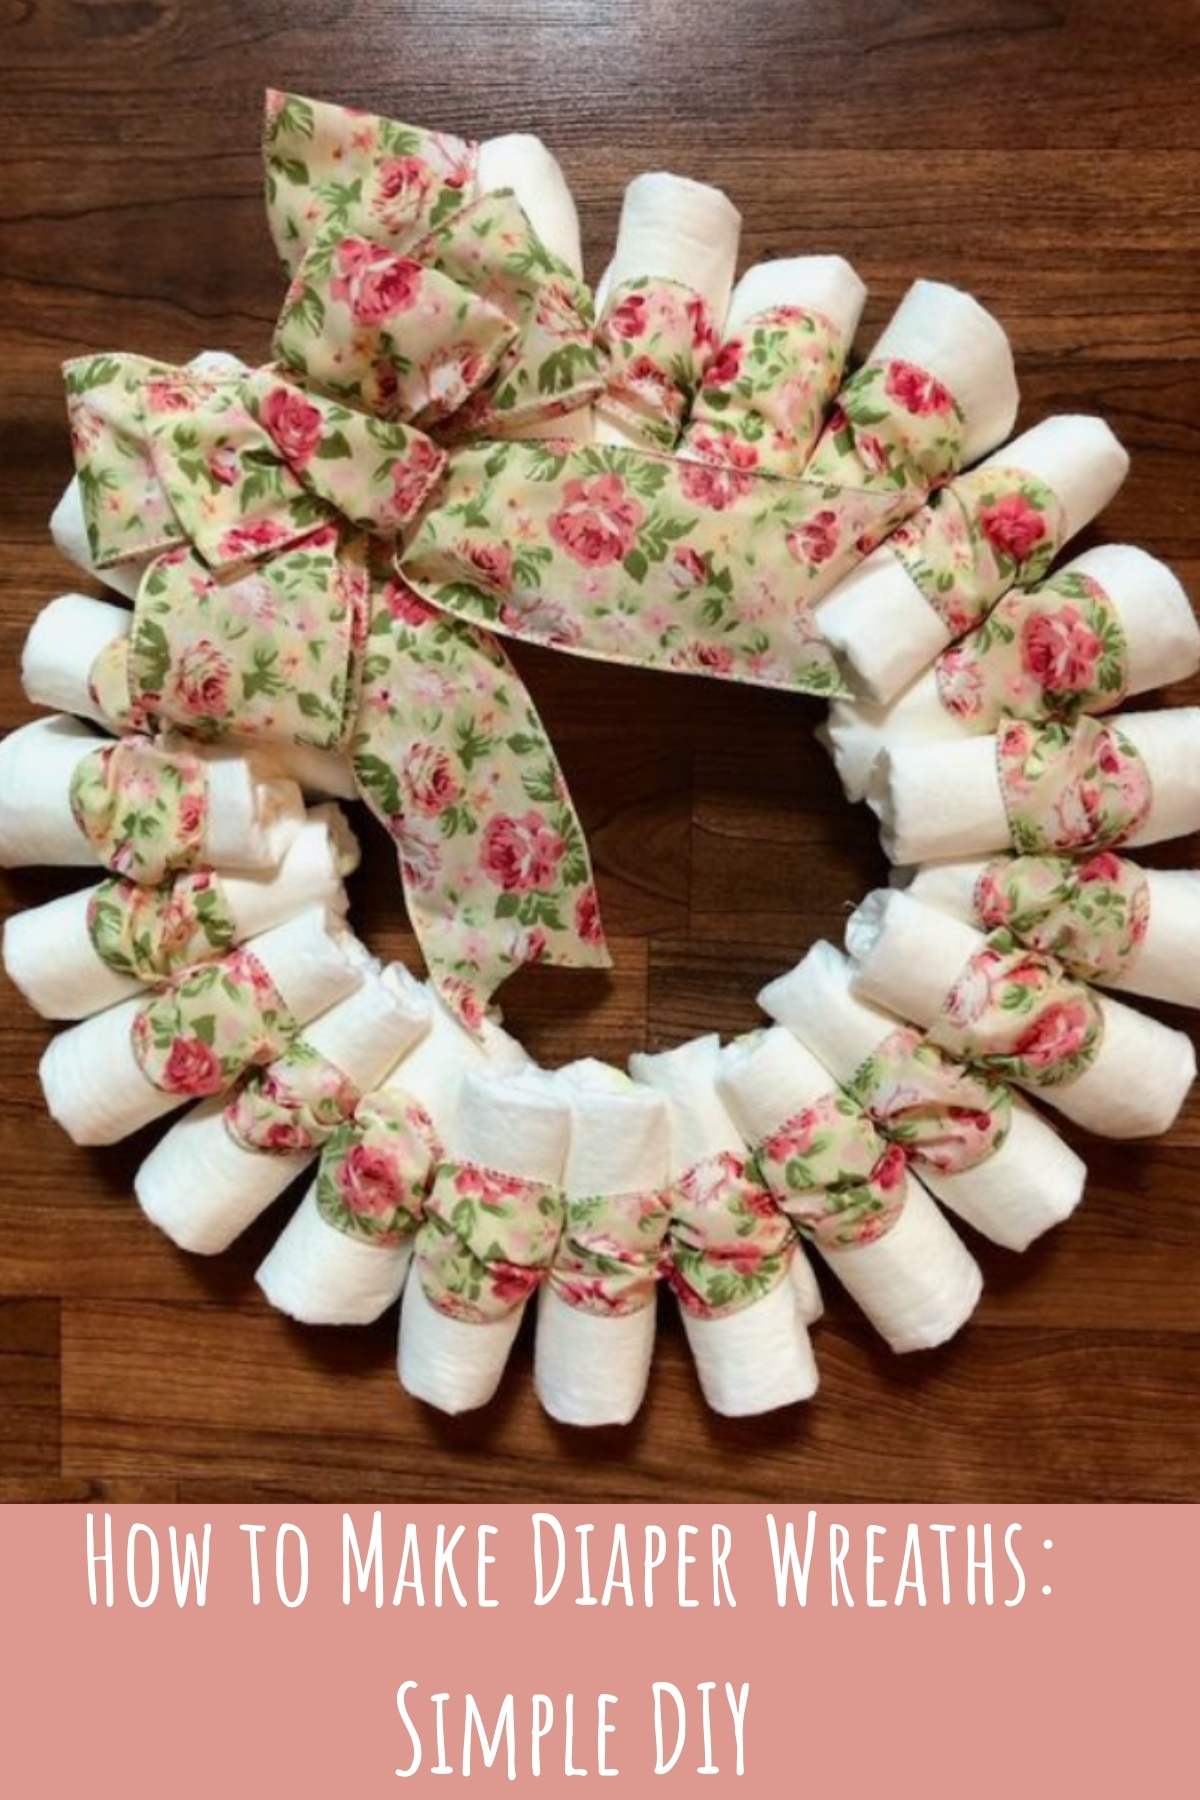 How to Make Diaper Wreaths: Simple DIY